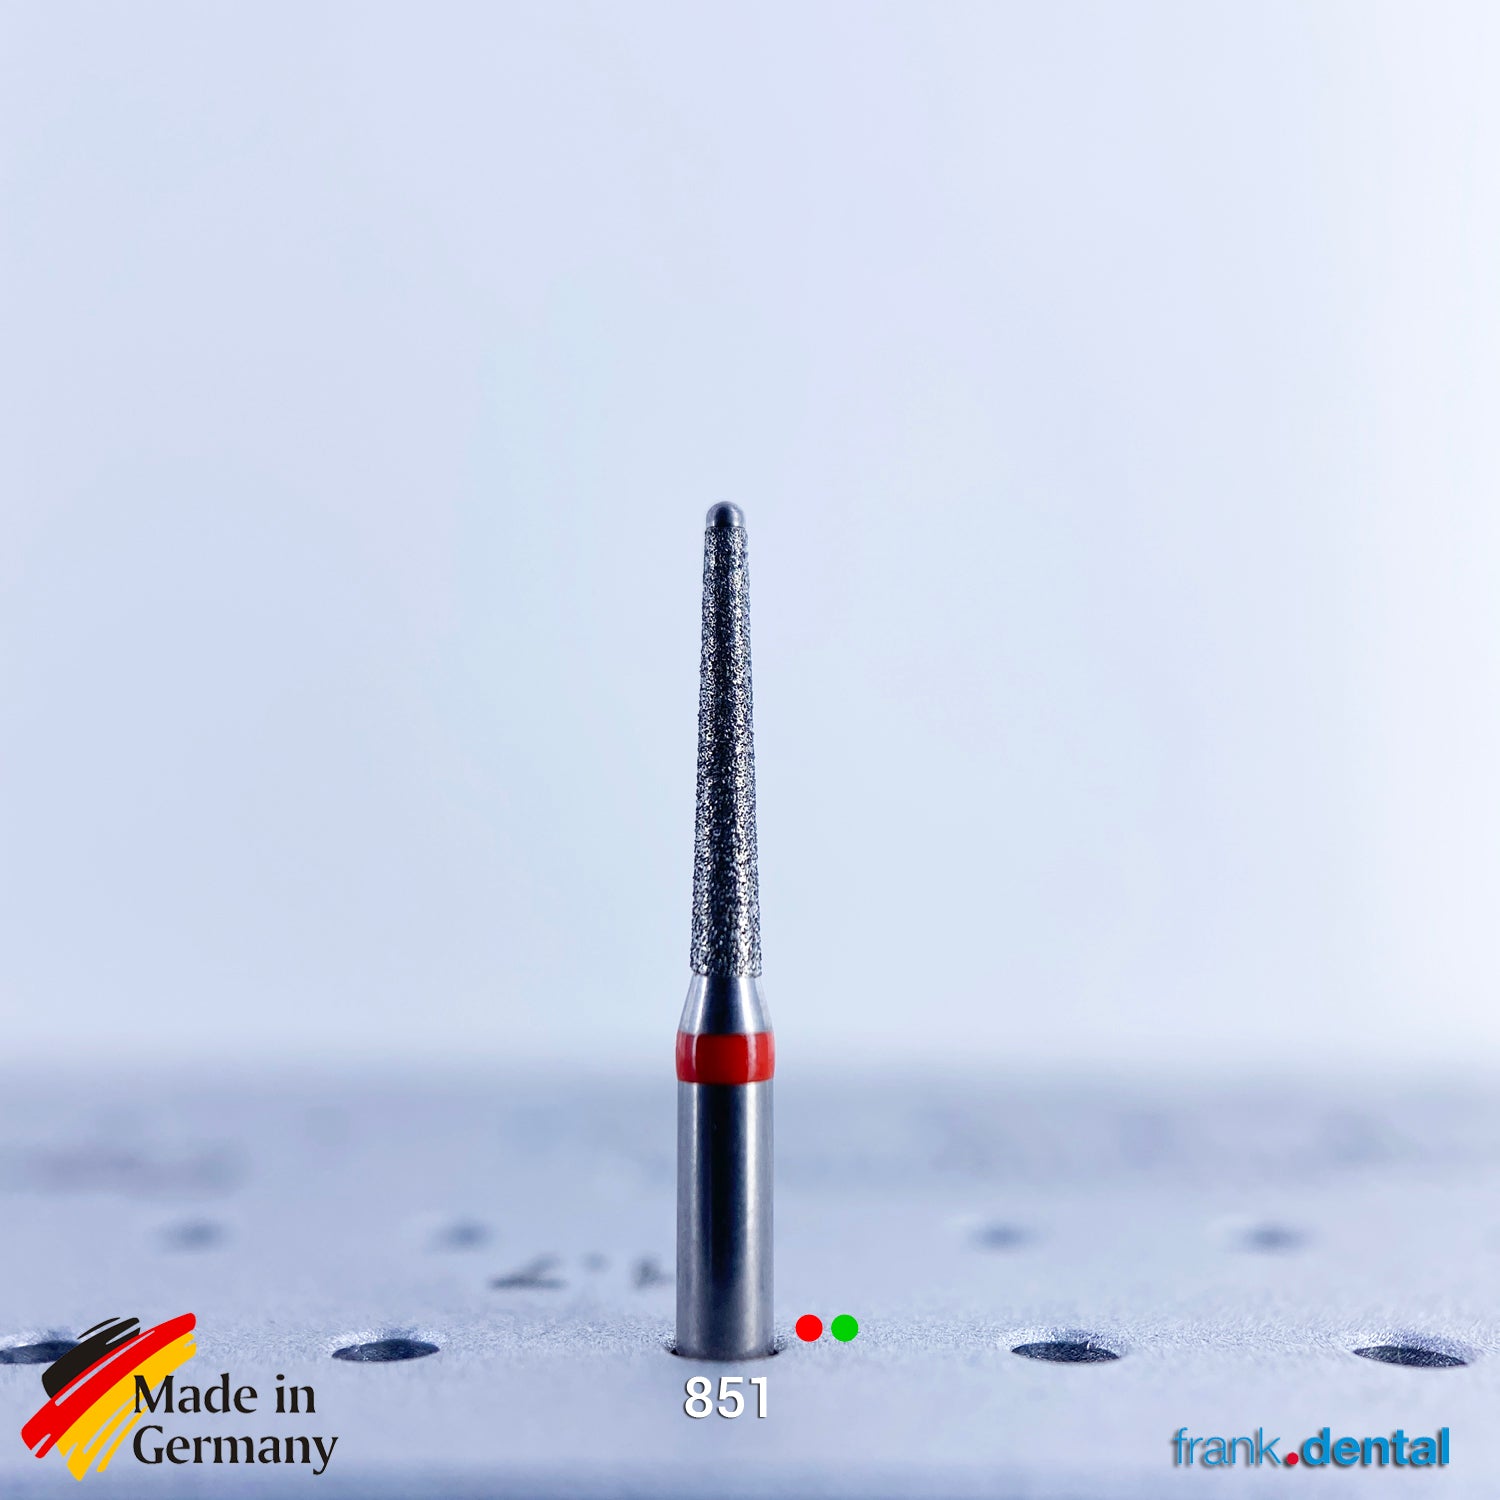 DentrealStore - Frank Dental Dental Natural Diamond Bur - 851 Dimond Bur for Air Turbine